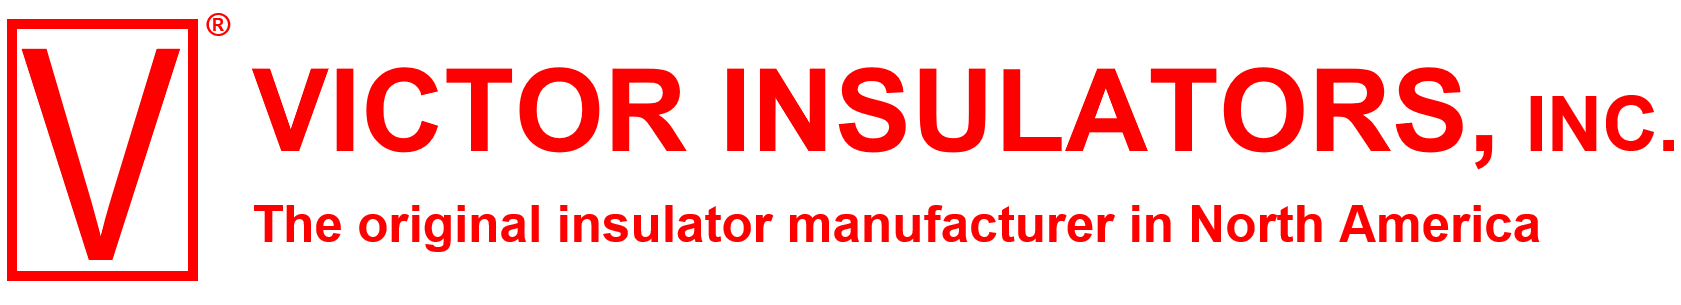 Victor Insulators, Inc.